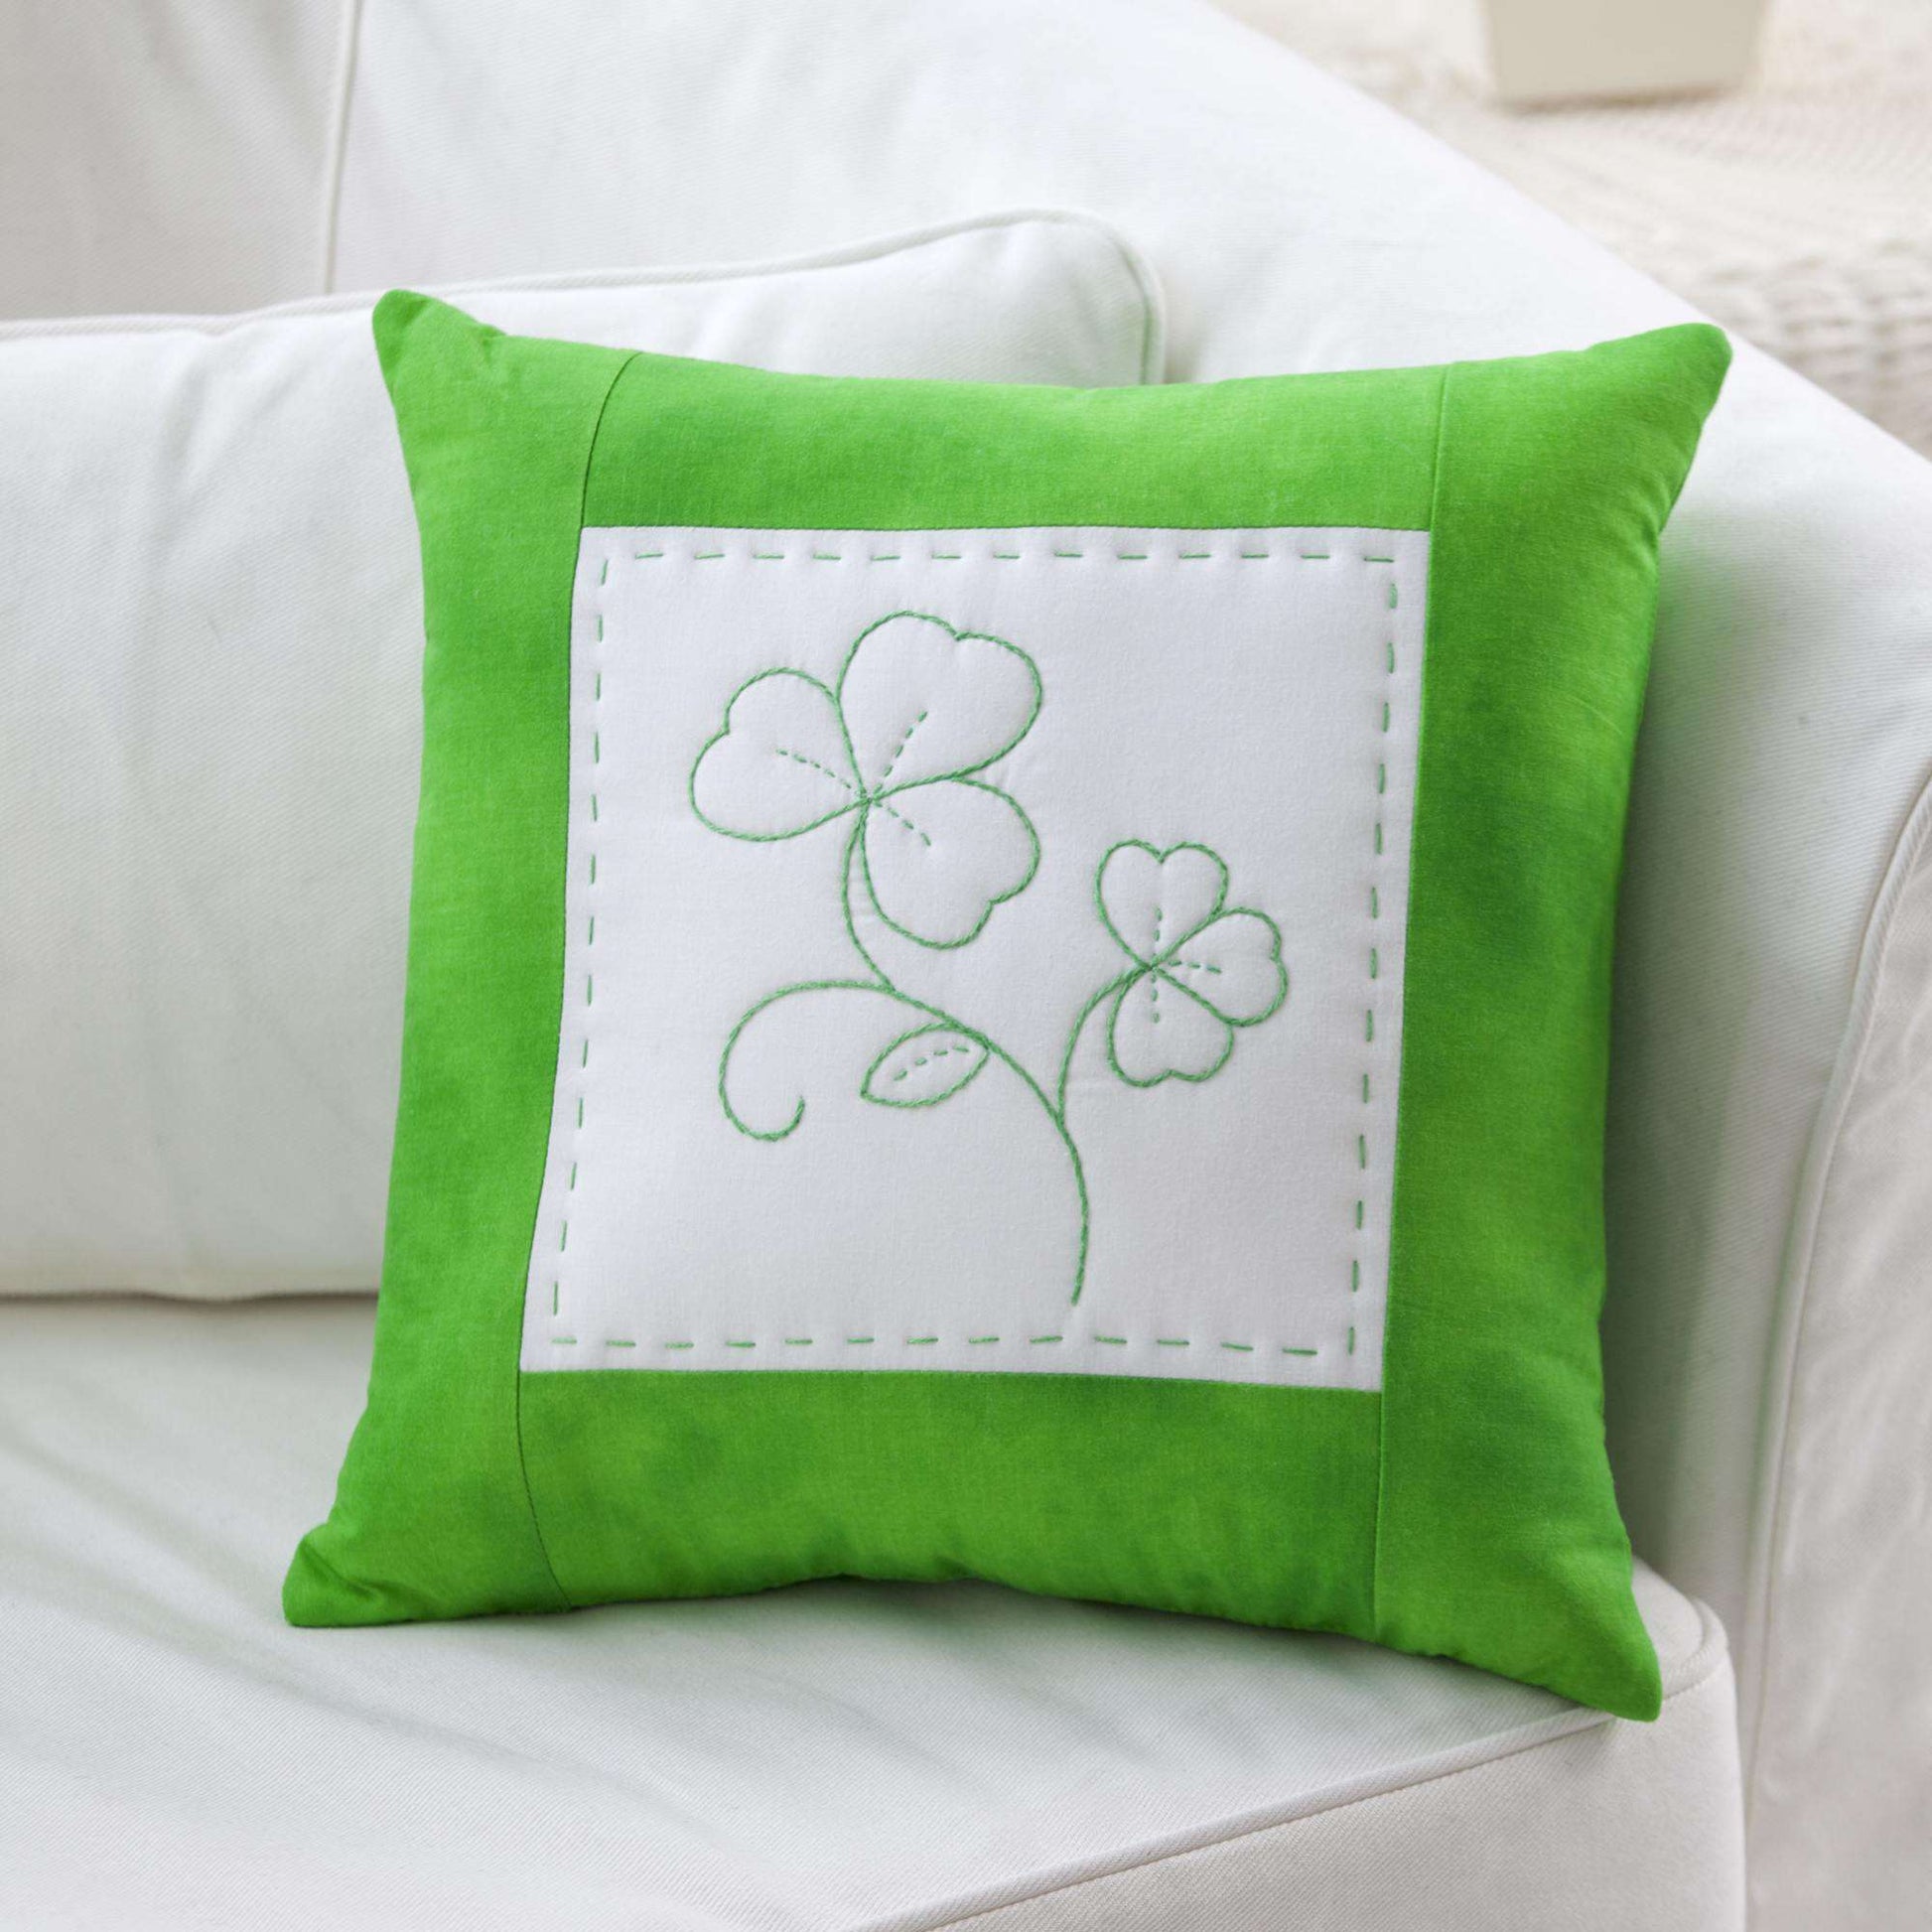 Free Coats & Clark Sewing Shamrock Greenwork Pillow Pattern